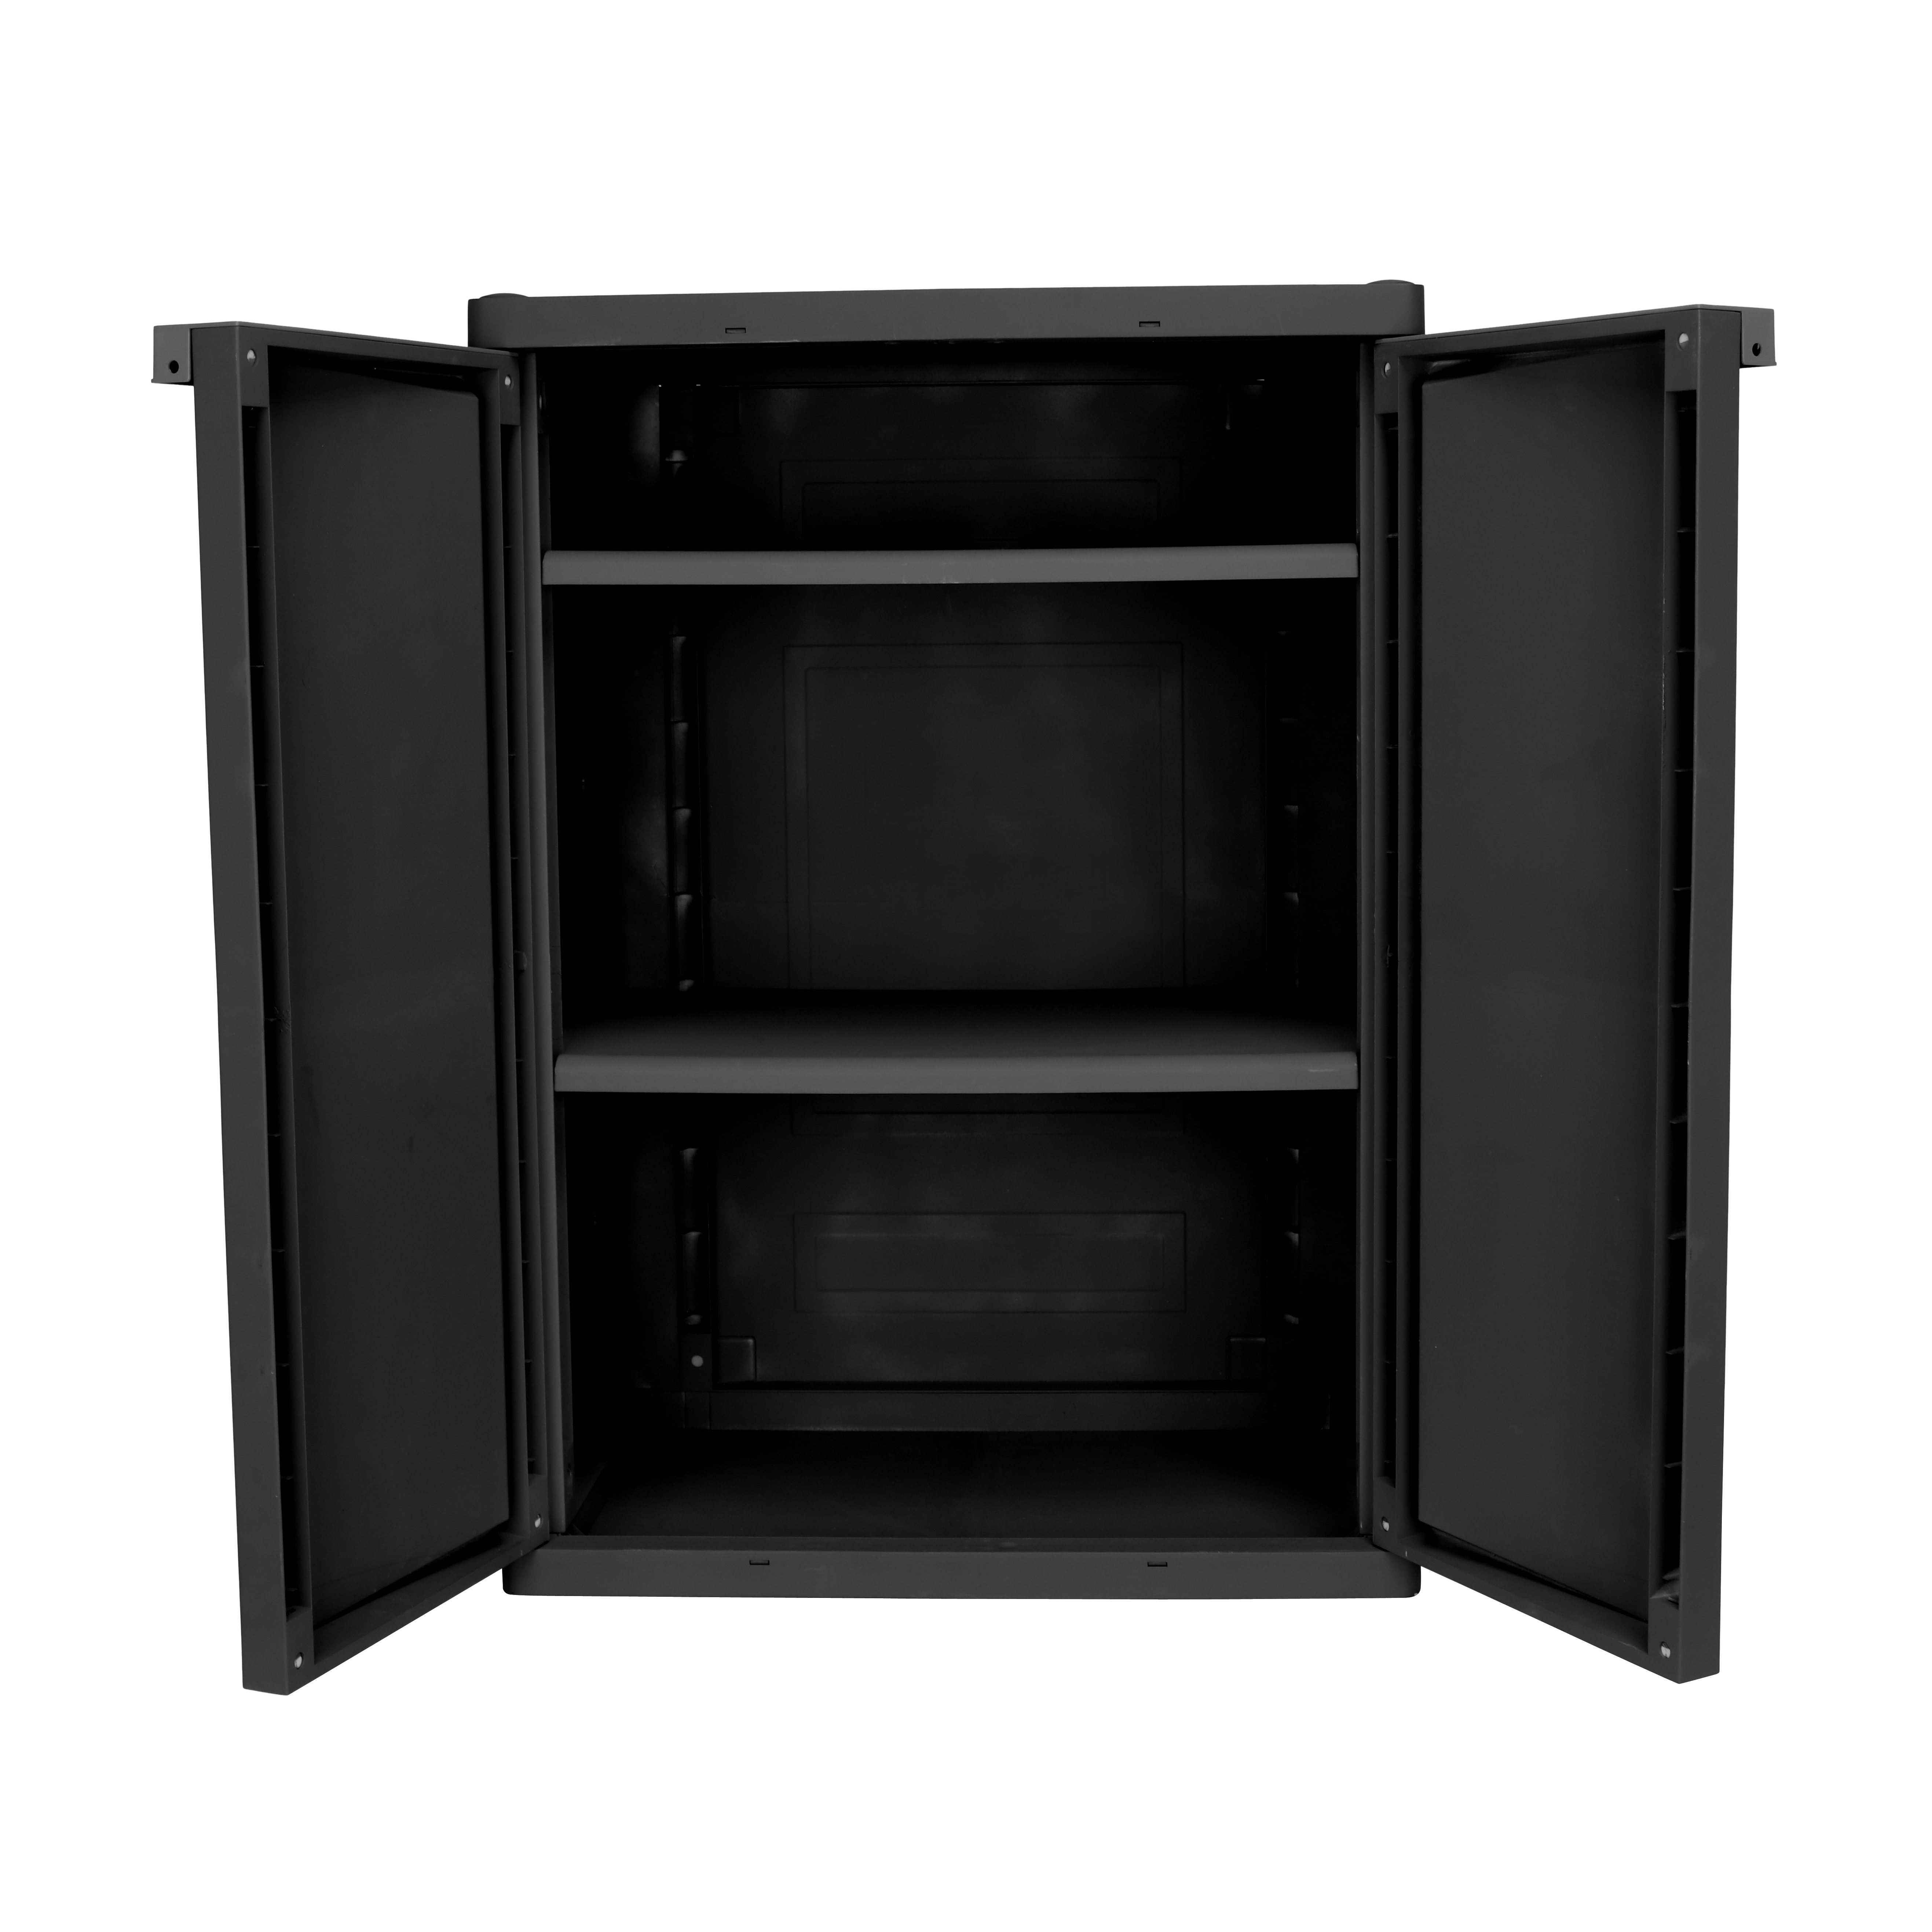 Hyper Tough 2 Shelf Plastic Garage Storage Cabinet 18.5Dx25.47Wx35.43"H, Black - image 5 of 9